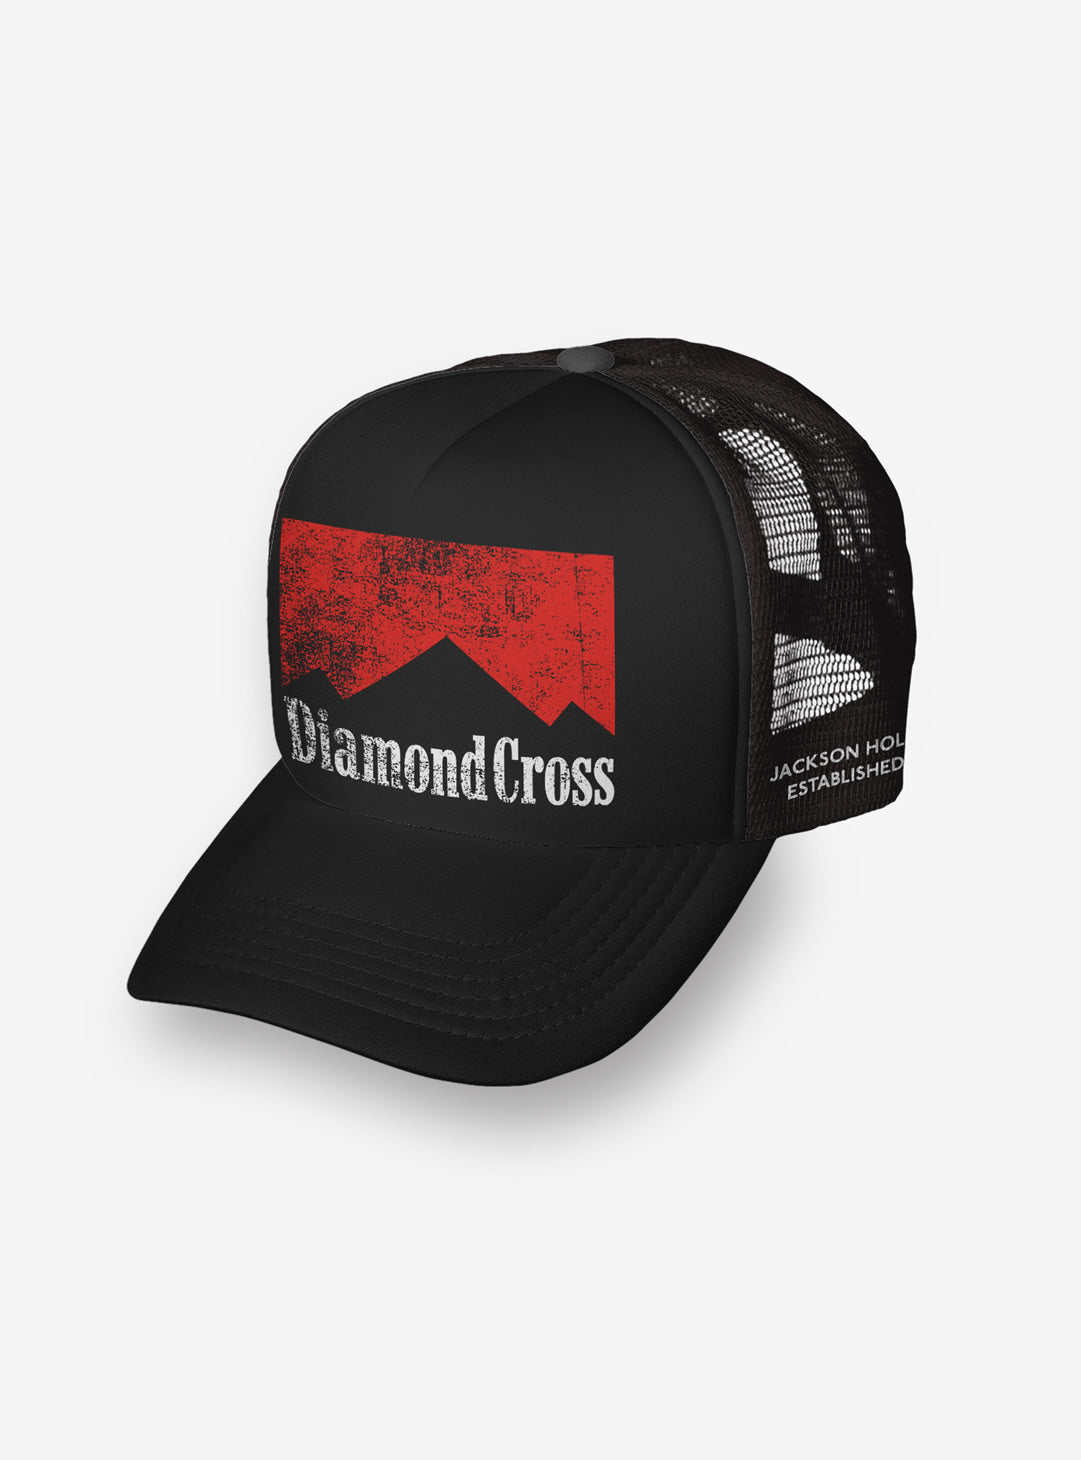 Diamond Cross Ranch Marlboro Man Wyoming Cowboy Hat